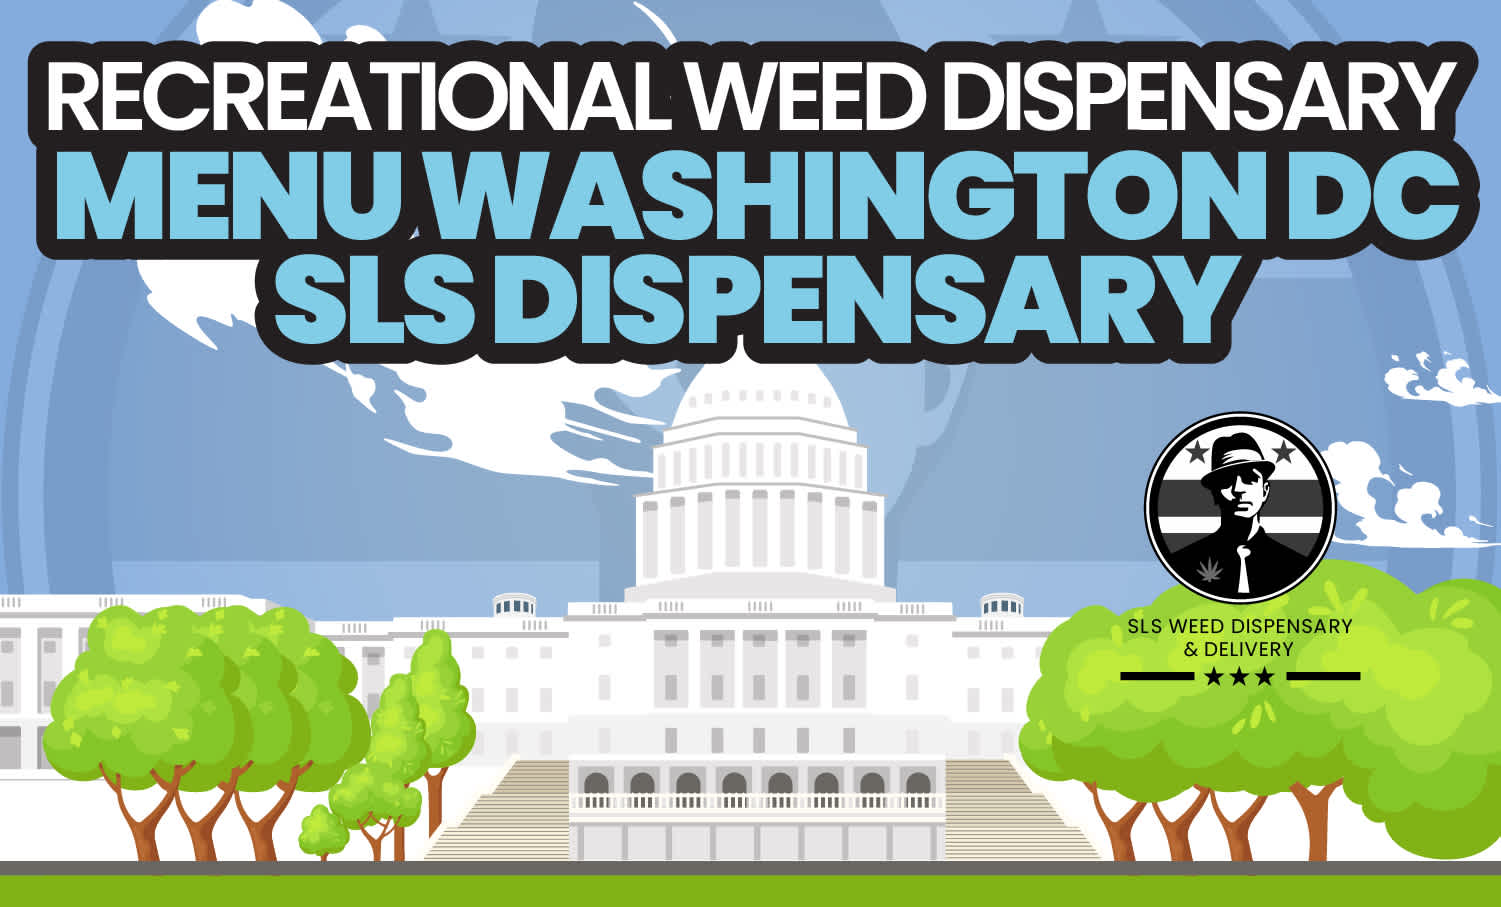 Recreational Weed Dispensary Menu - Washington, DC 